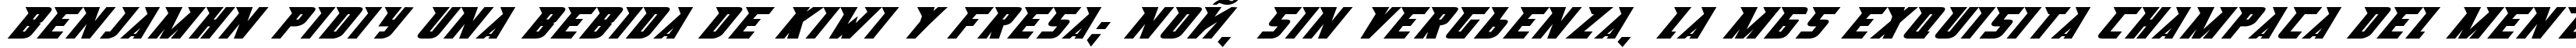 Пример написания шрифтом FK Abberancy.kz текста на испанском